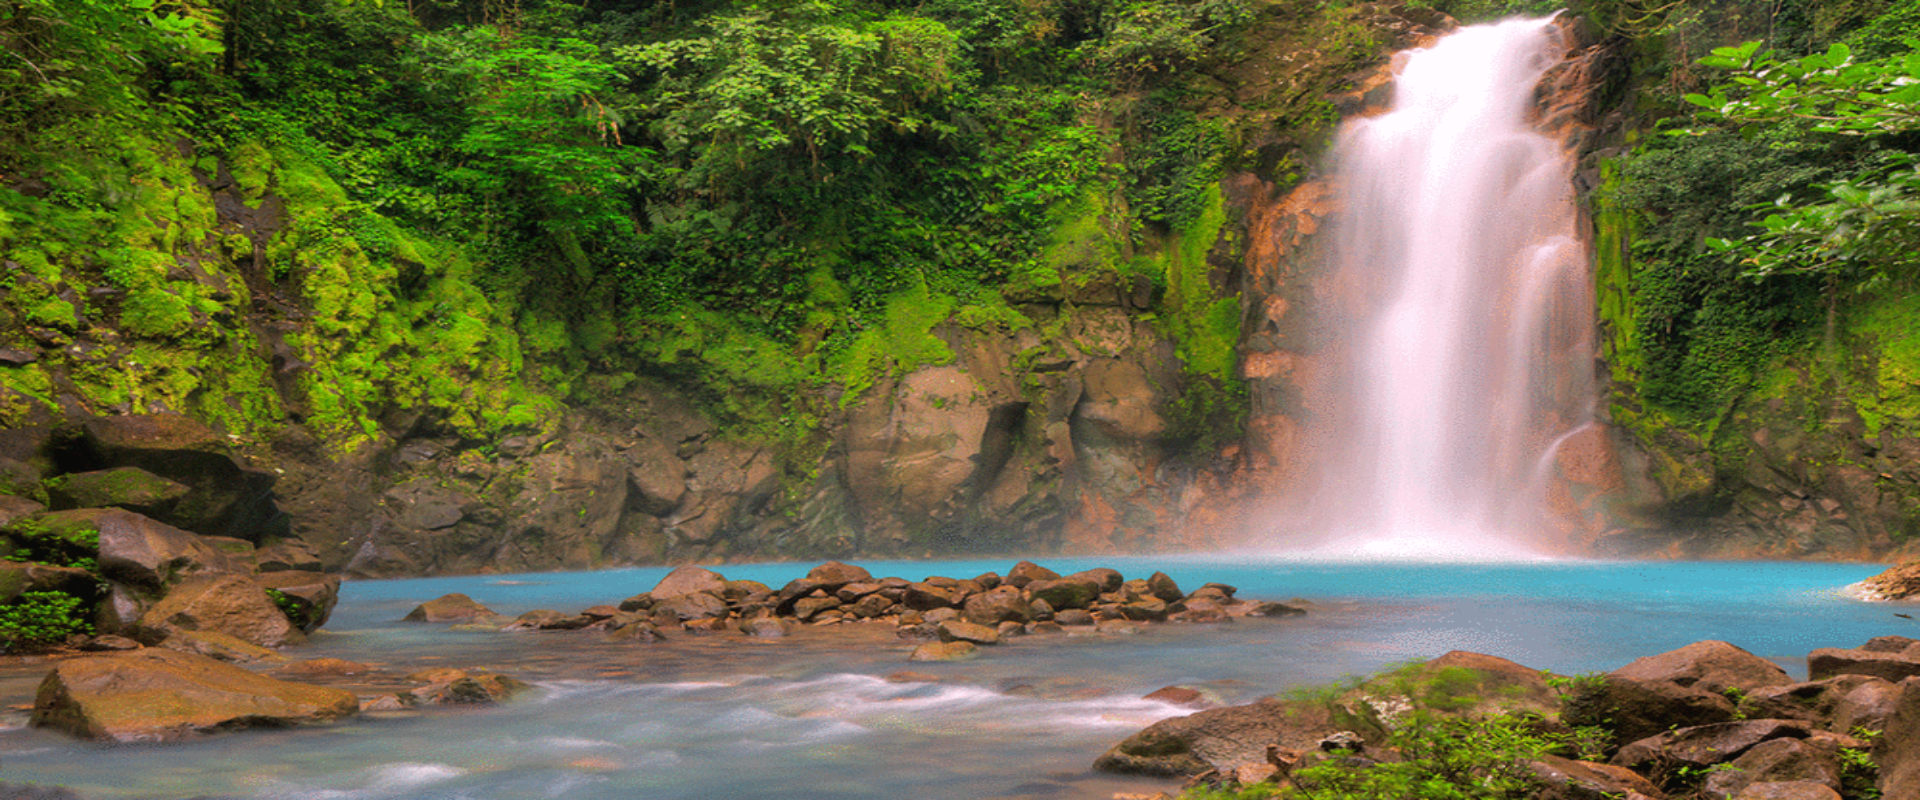 Caminata al Río Celeste y Volcán Tenorio  | Costa Rica Jade Tours